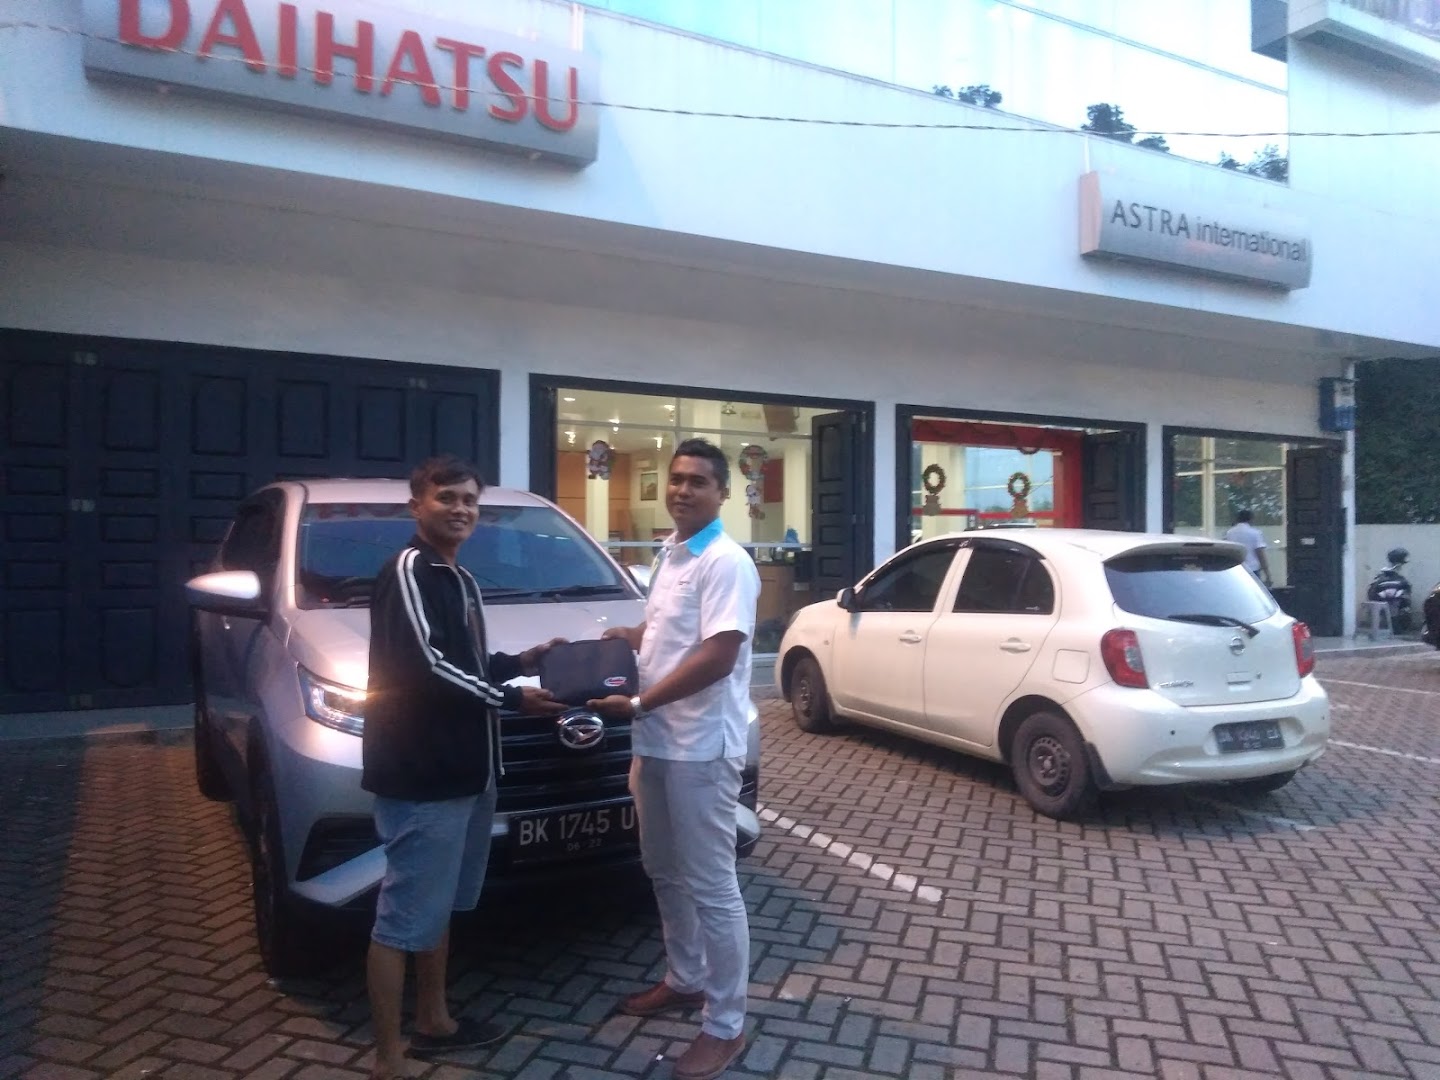 Daihatsu Medan Johor (official Dealer) Photo